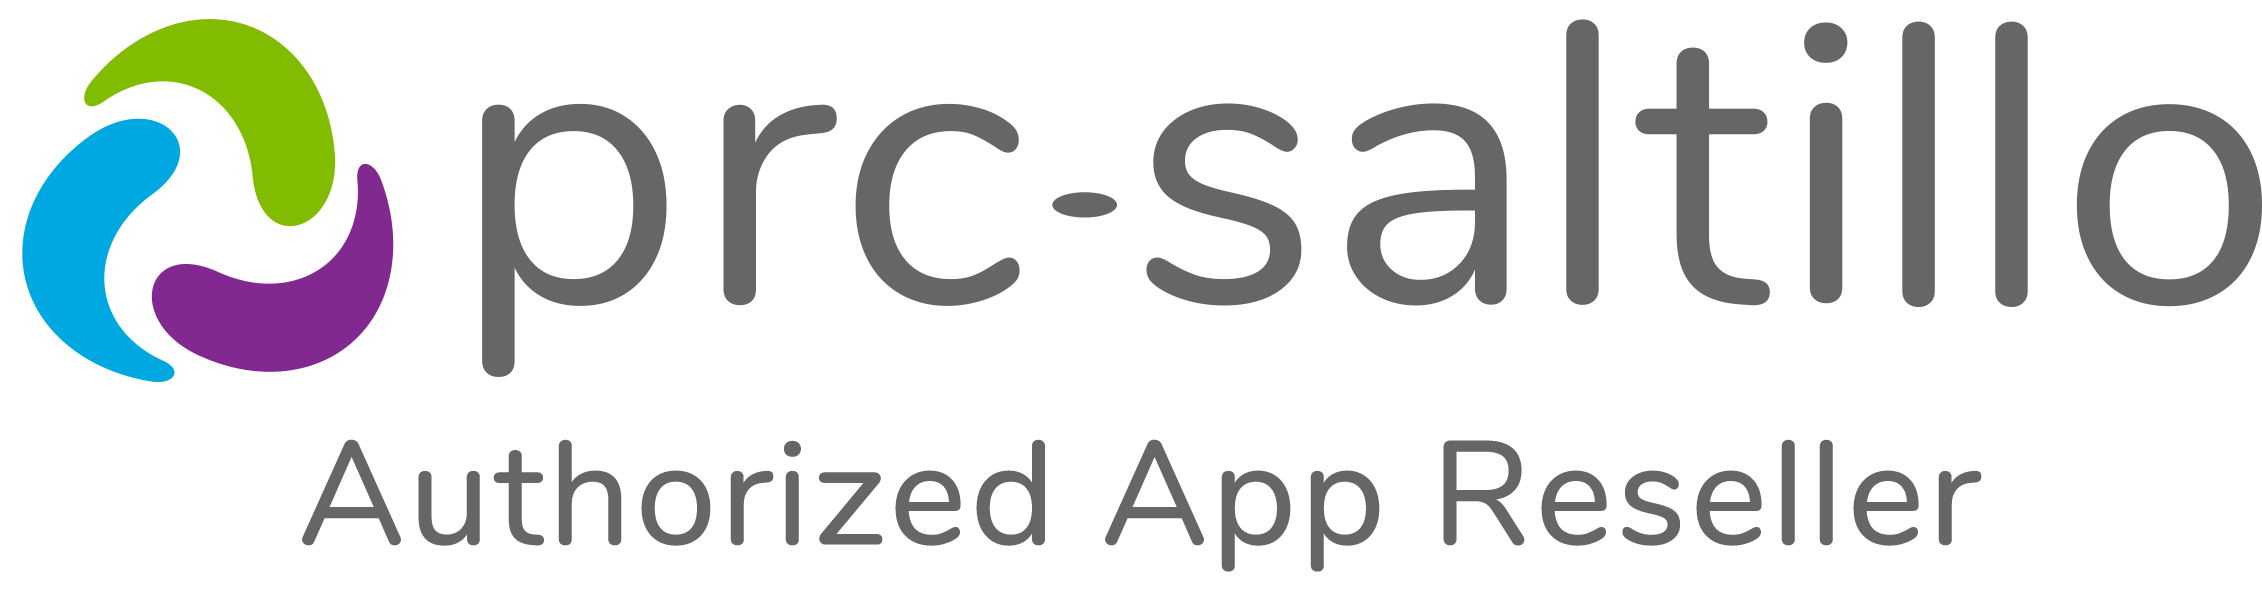 PRC-saltillo app reseller logo